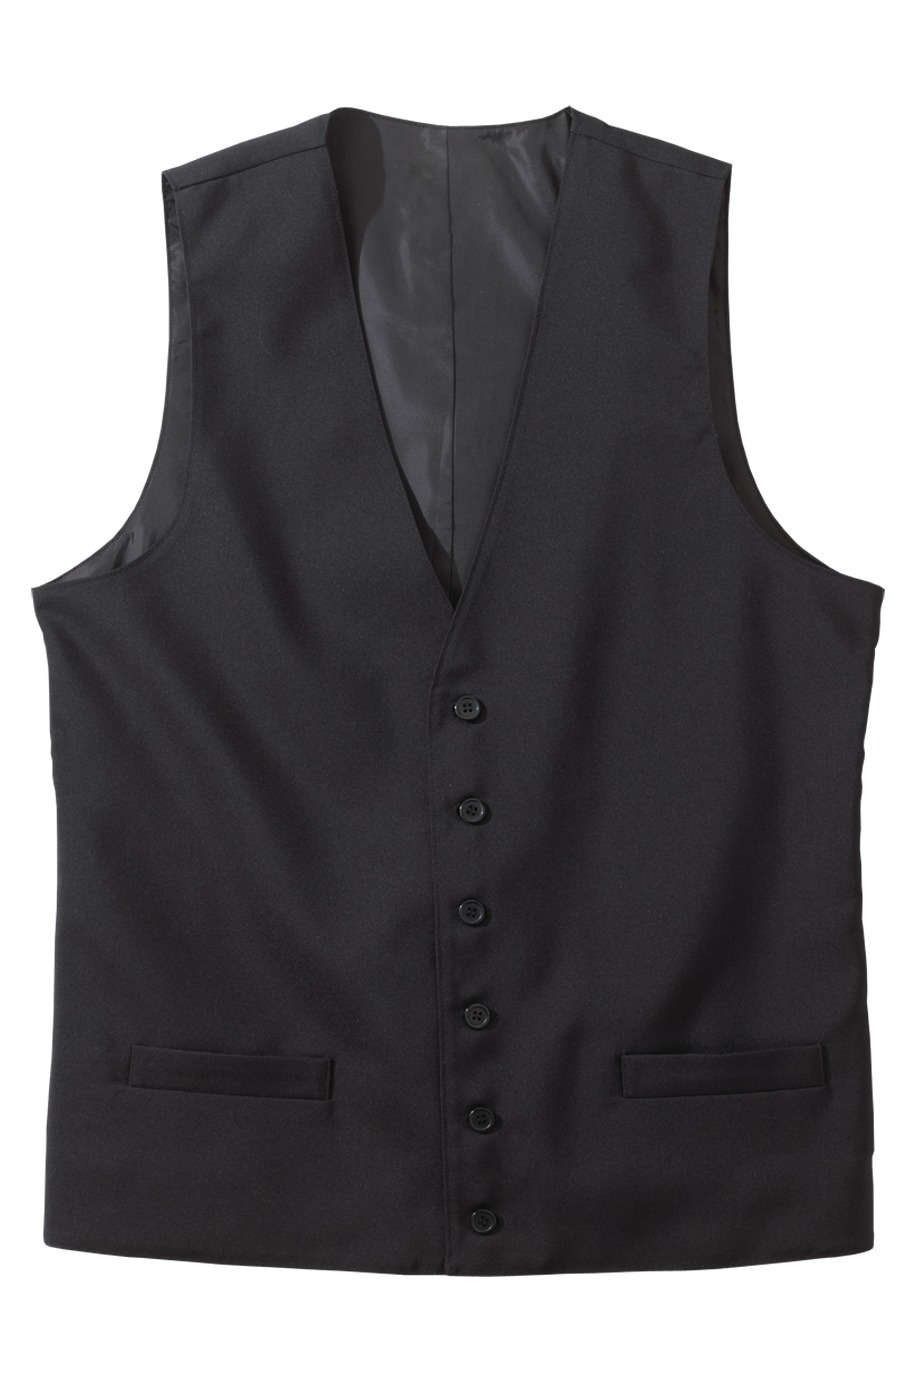 Edwards Garment 4550 - Men's Firenza Vest